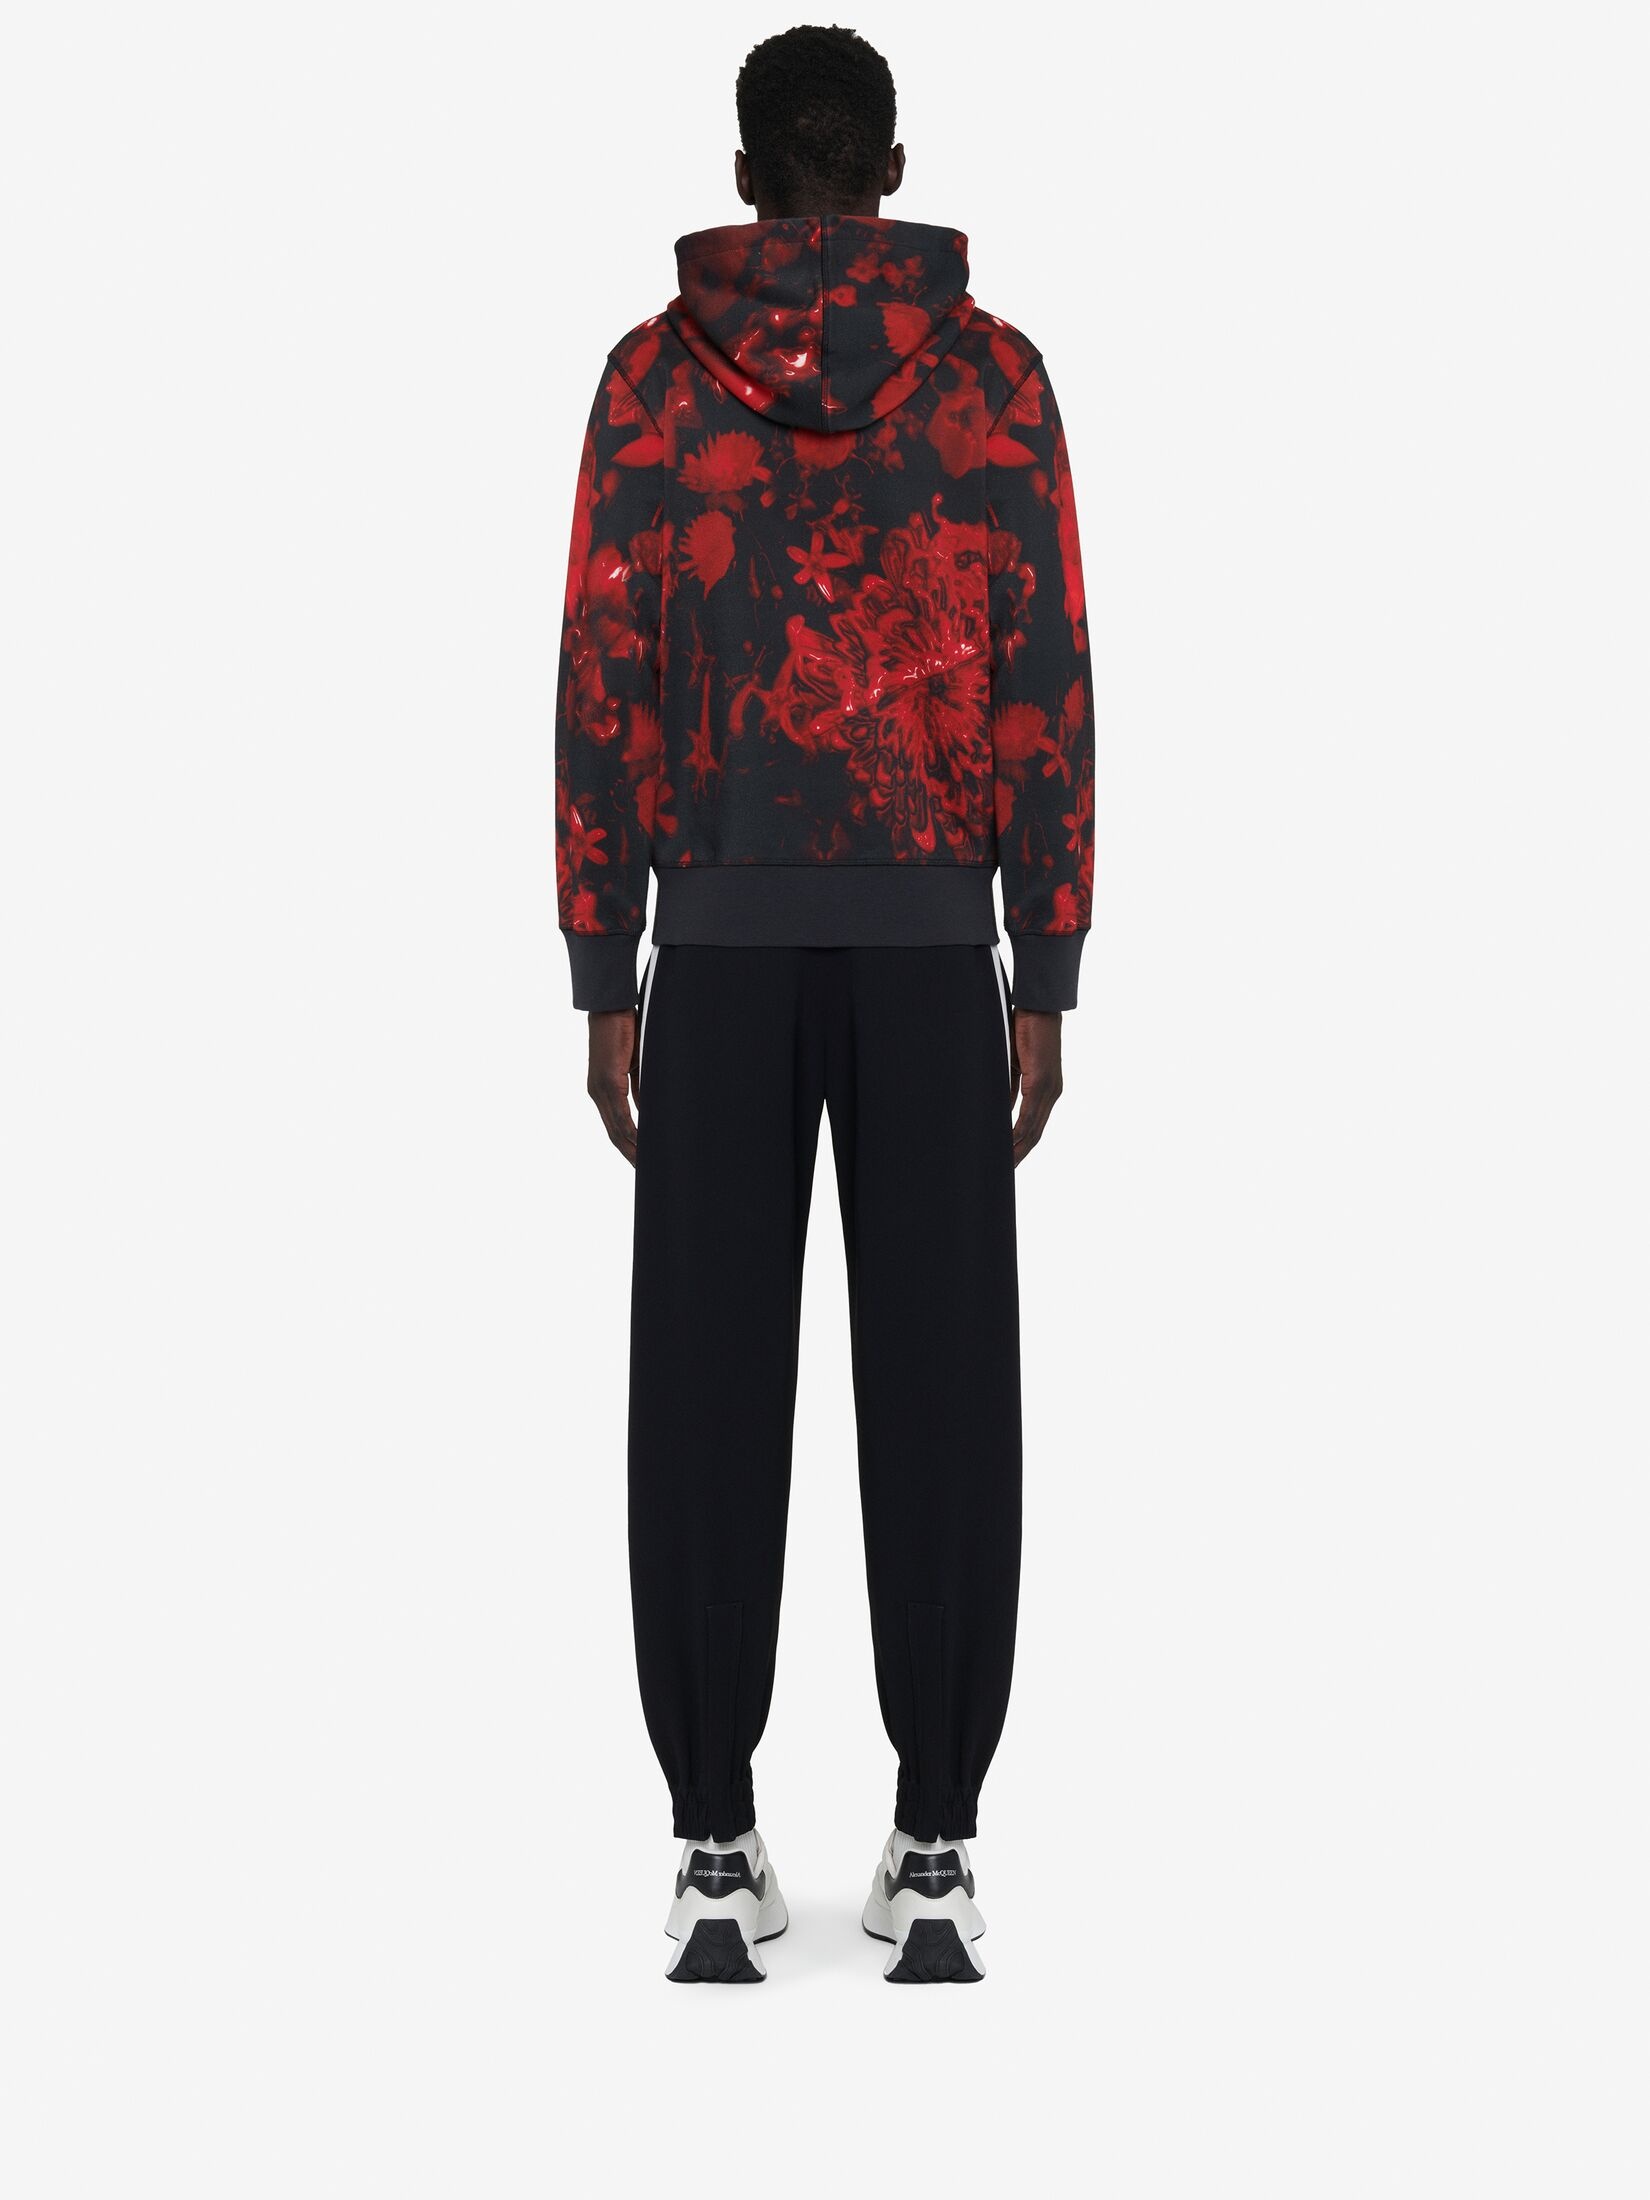 Men's Wax Flower Hooded Sweatshirt in Black/red - 4